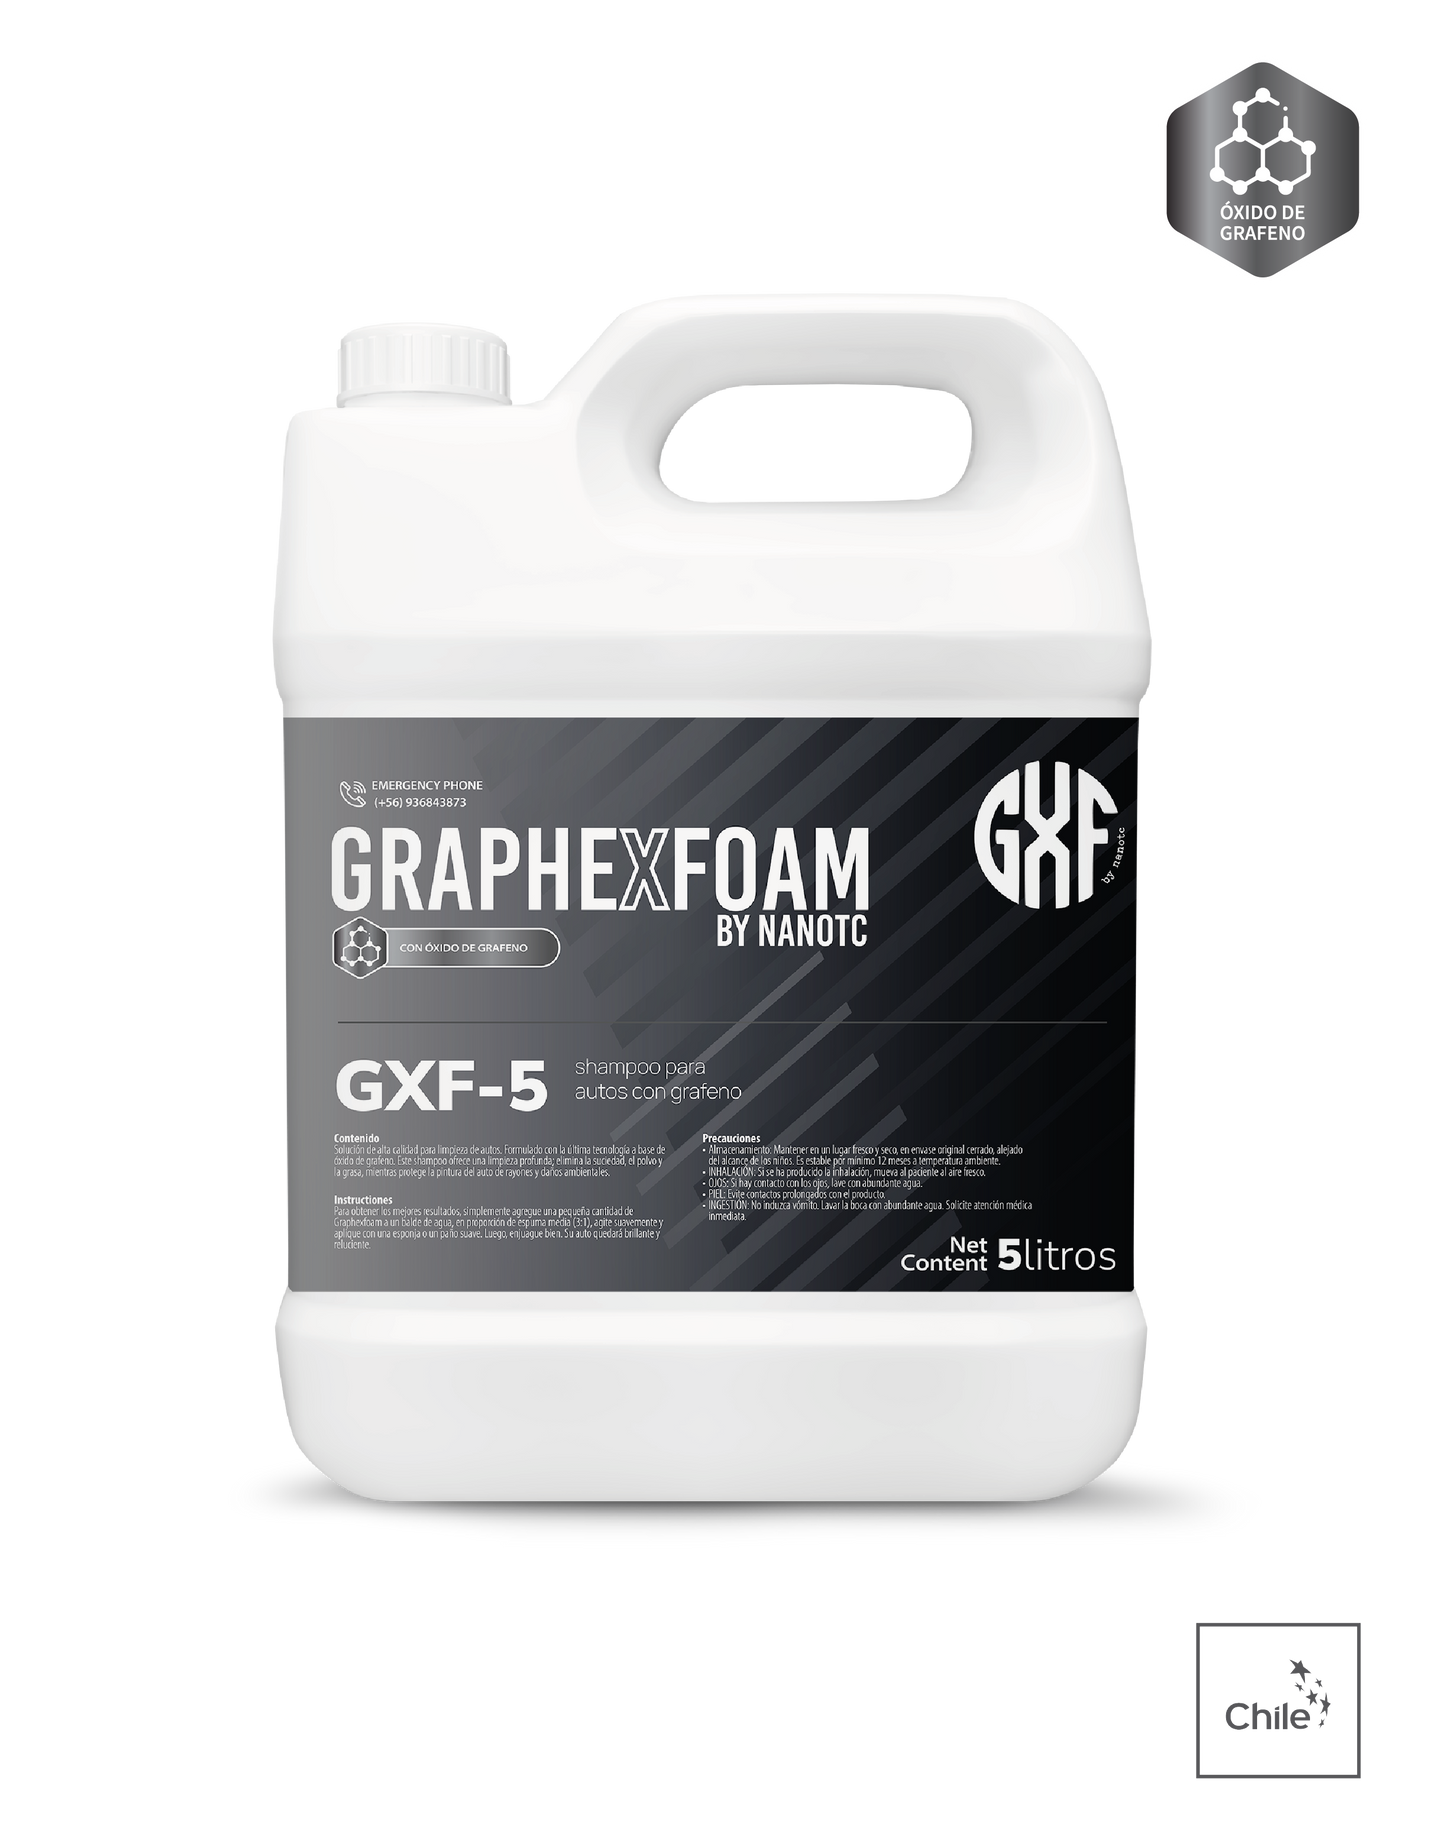 GrapheXfoam – Snow foam with graphene oxide